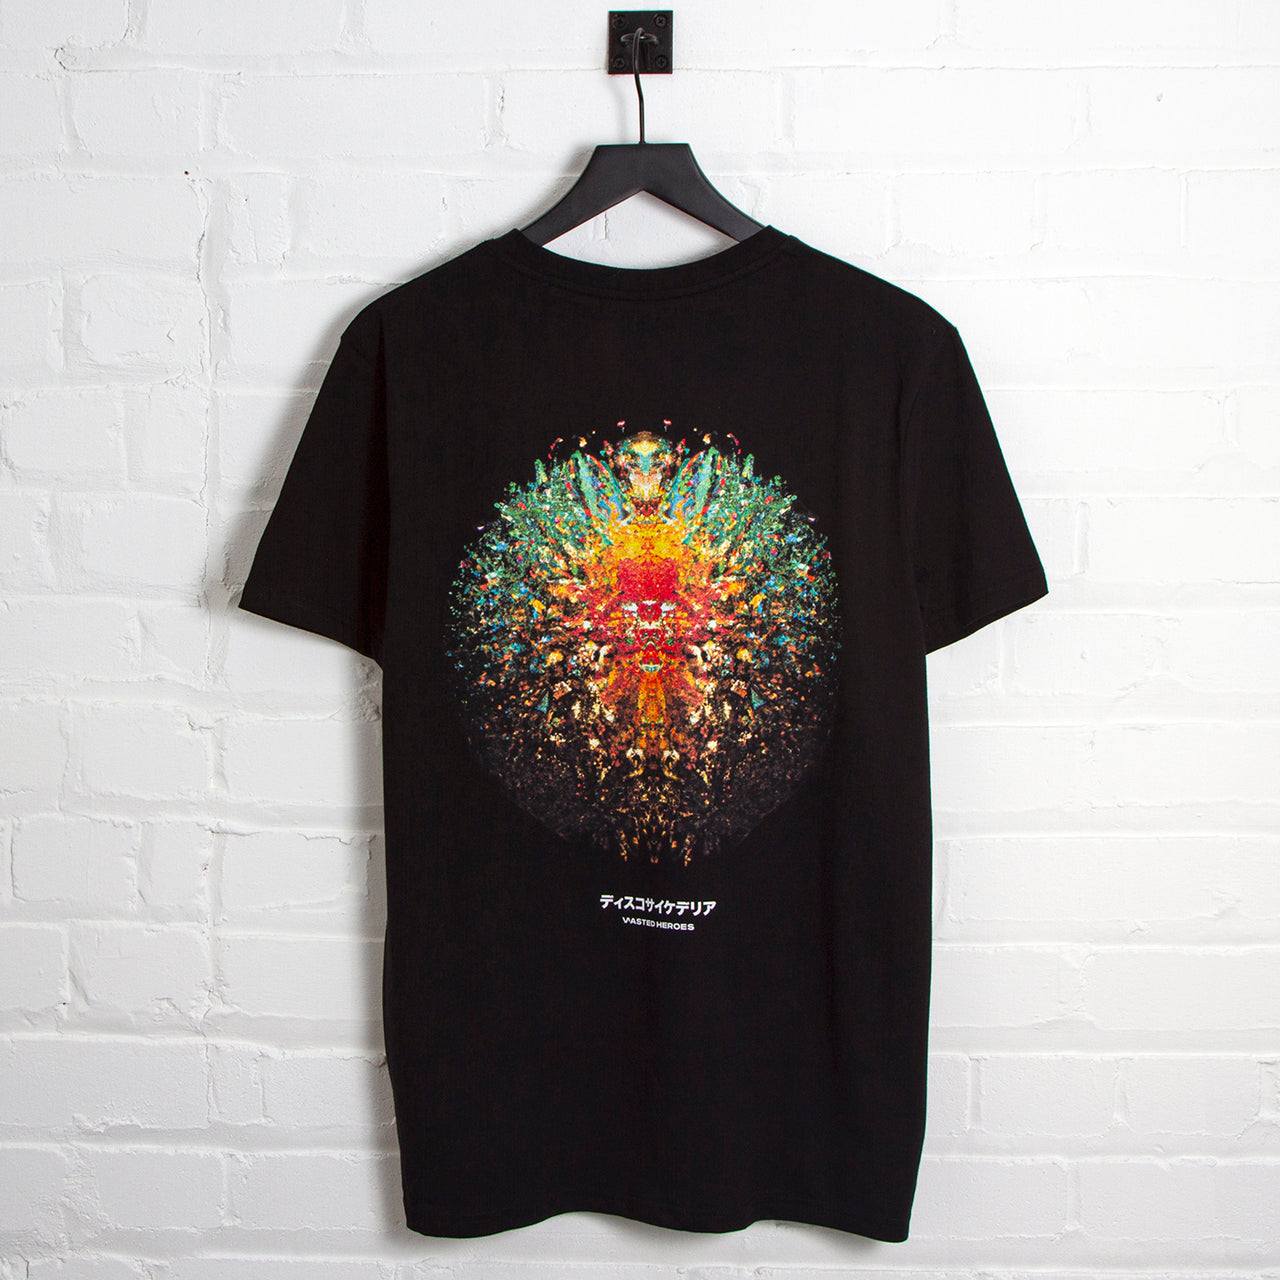 021 Disco Psychedelia Back Print - Tshirt - Black